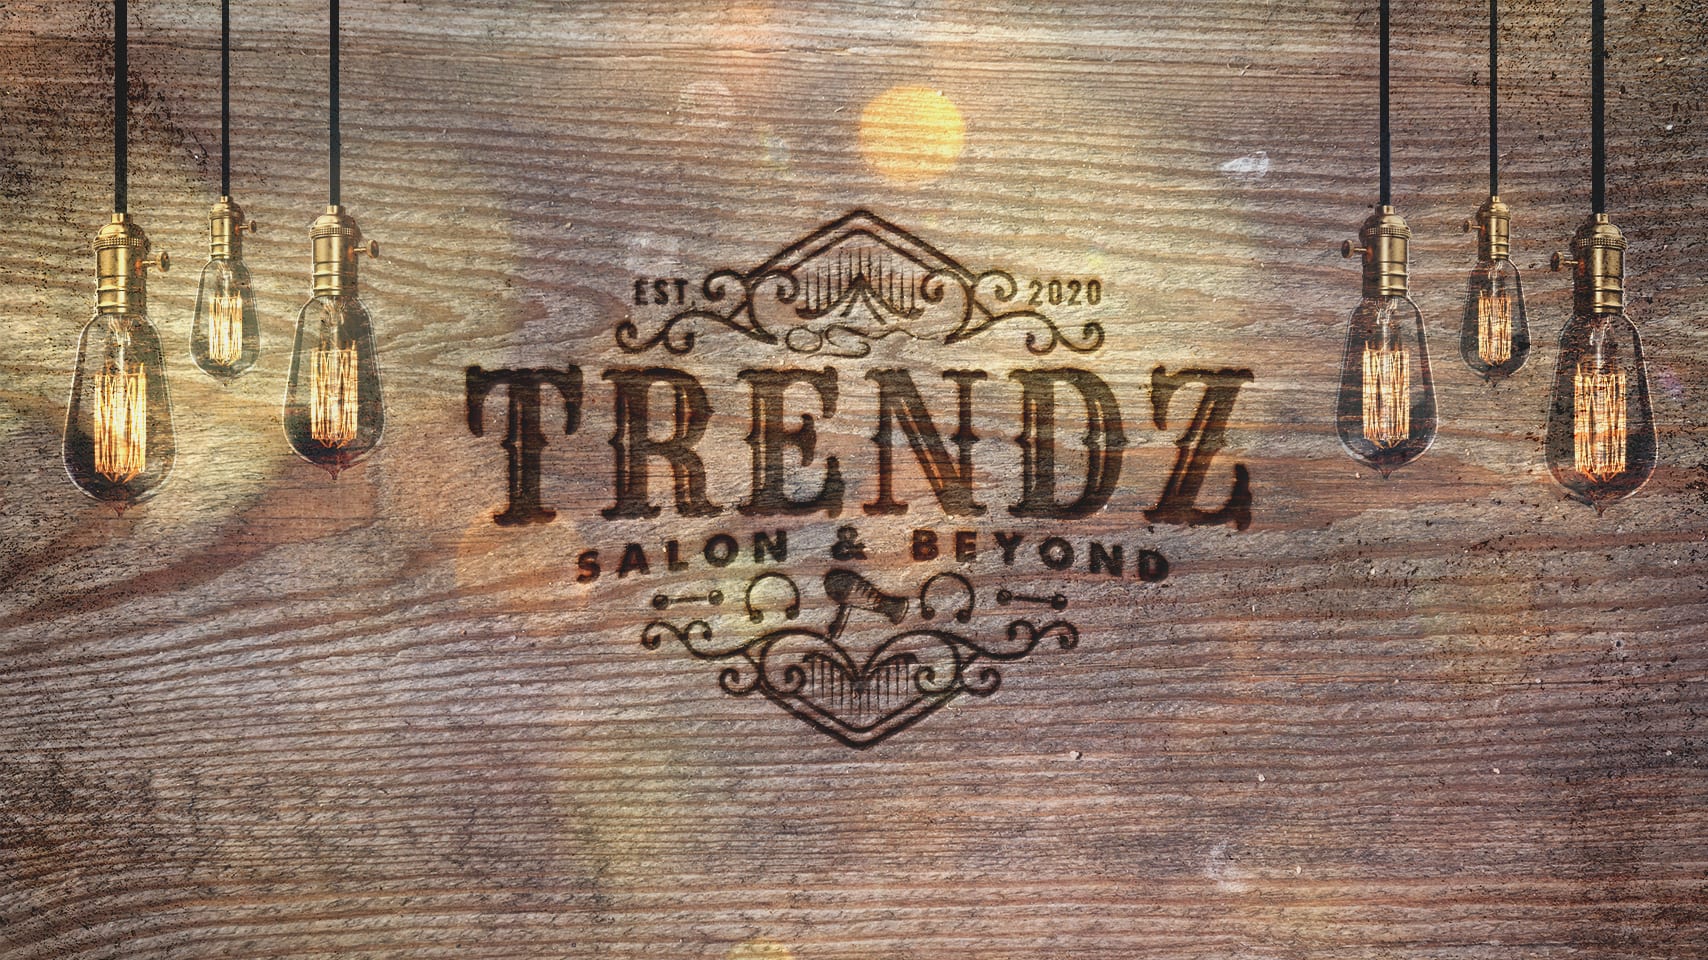 Trendz Salon and Beyond